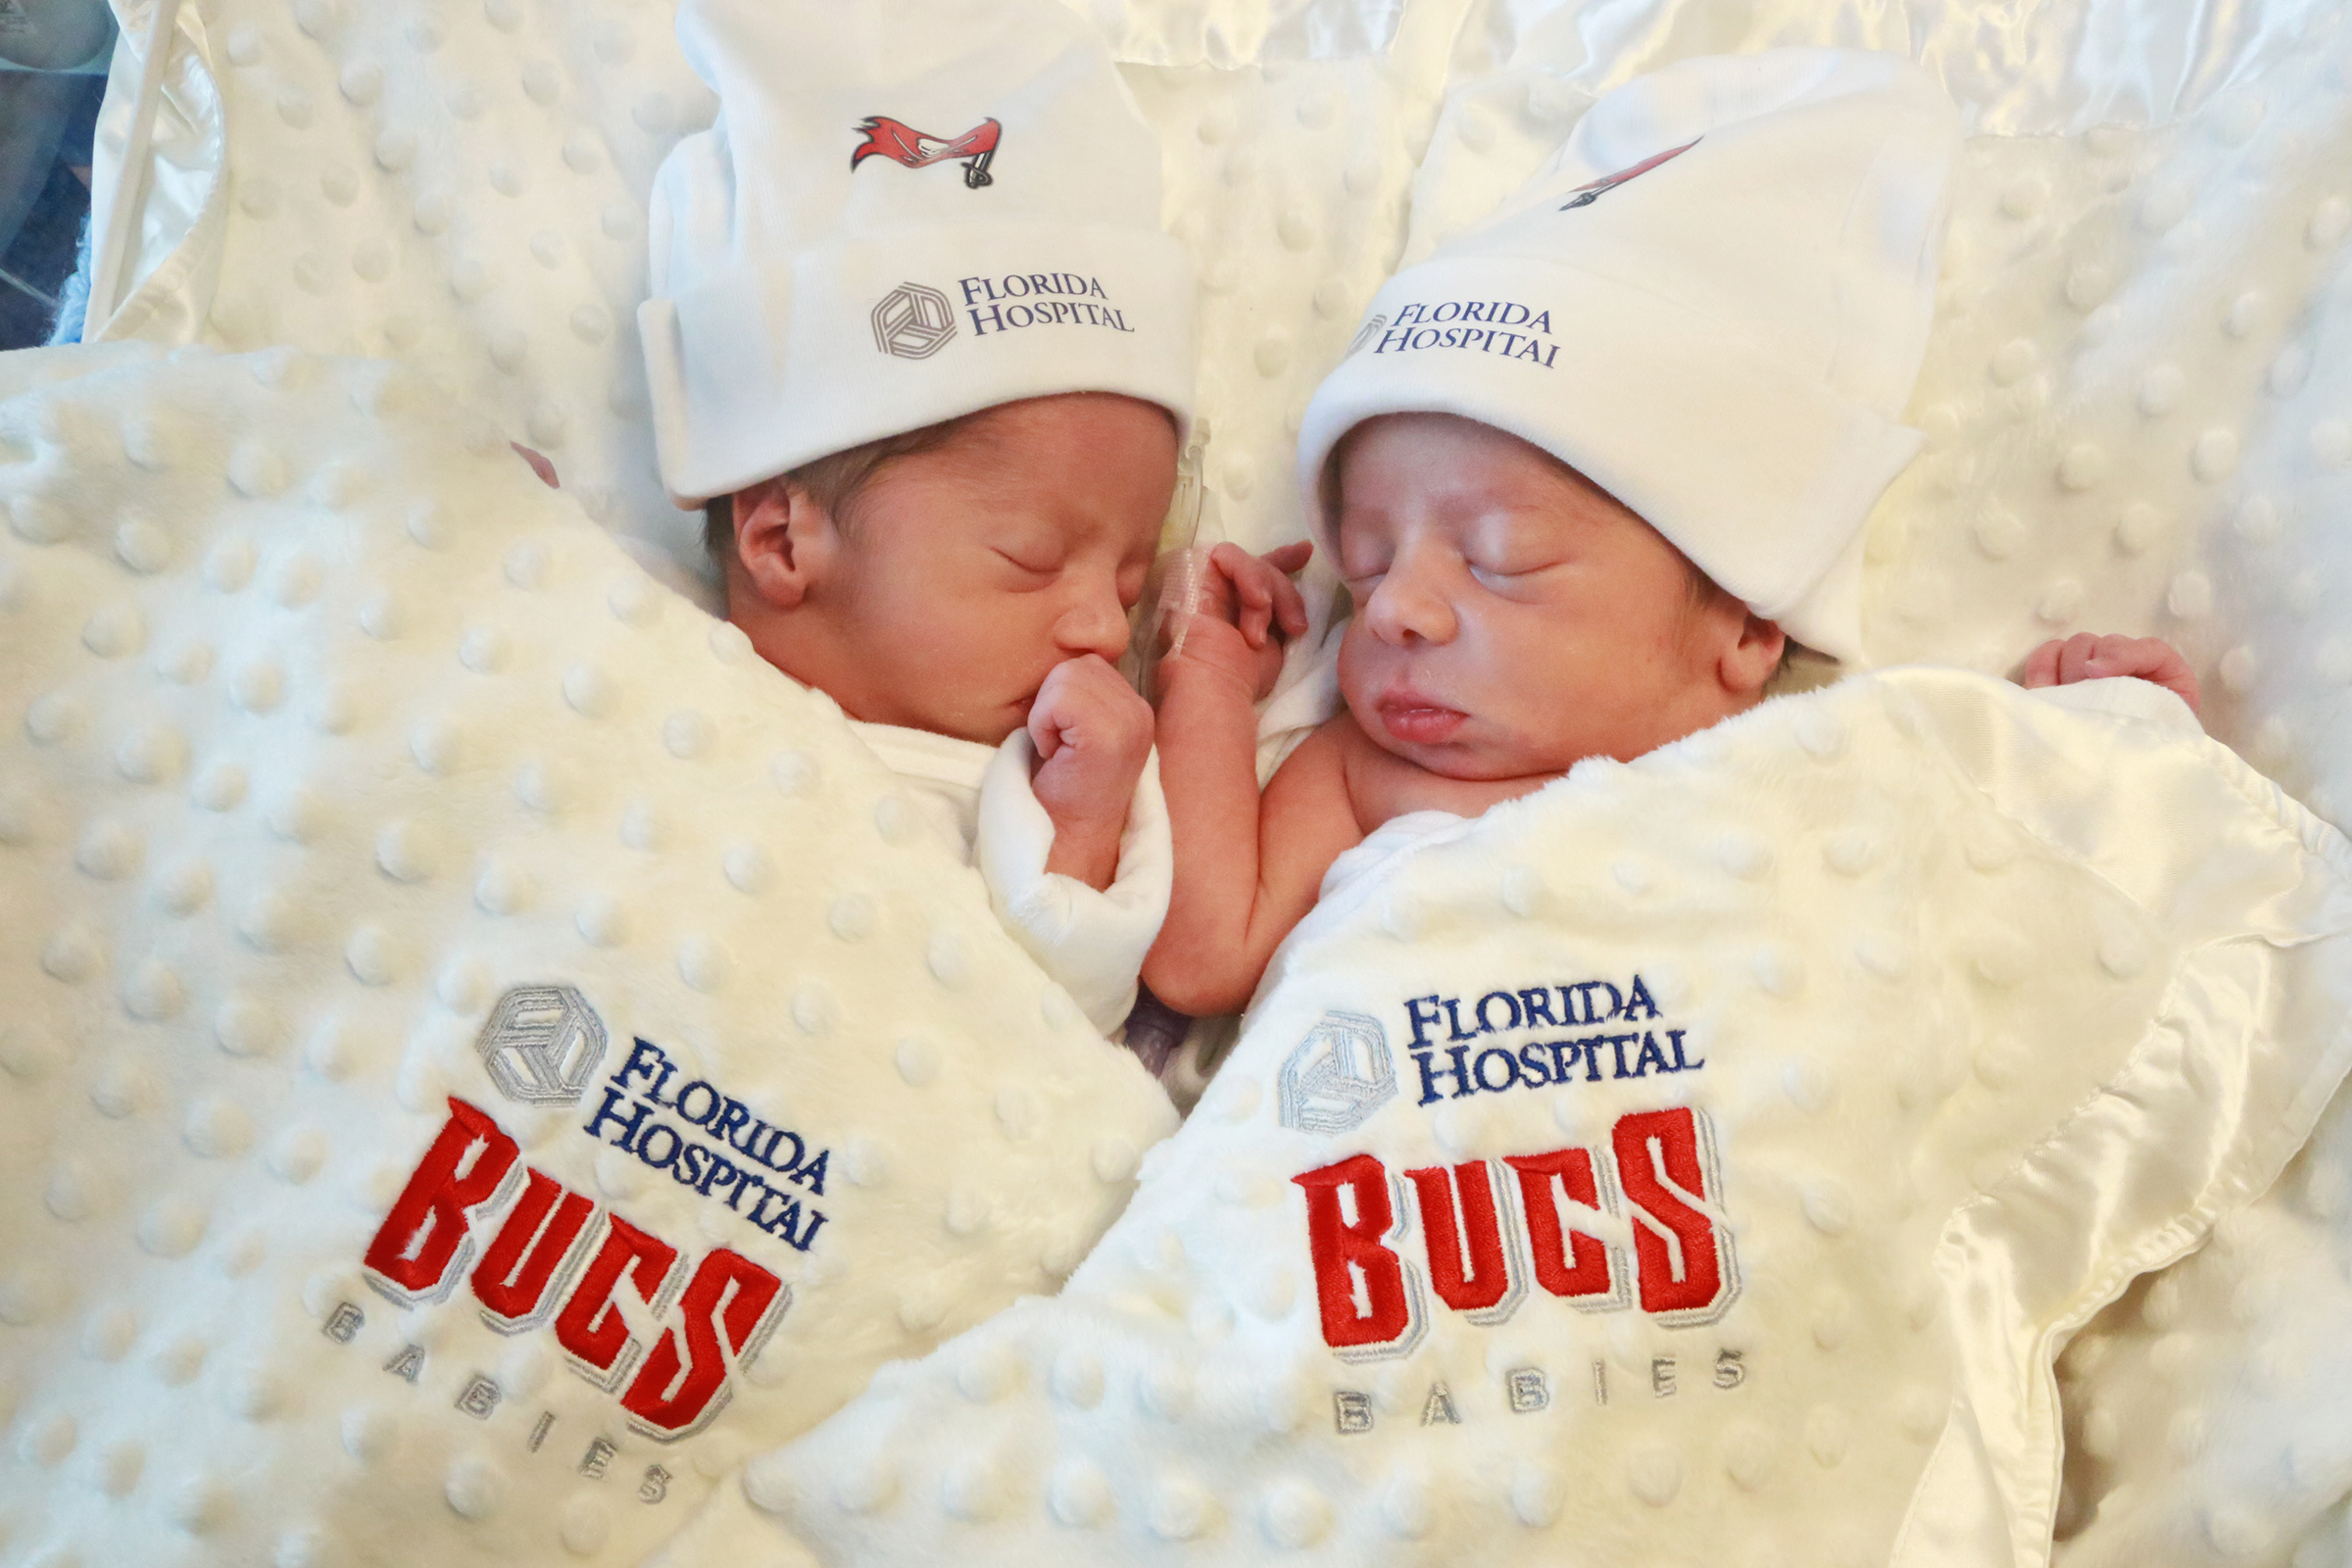 Bucs Babies Twins! Asher & Levi